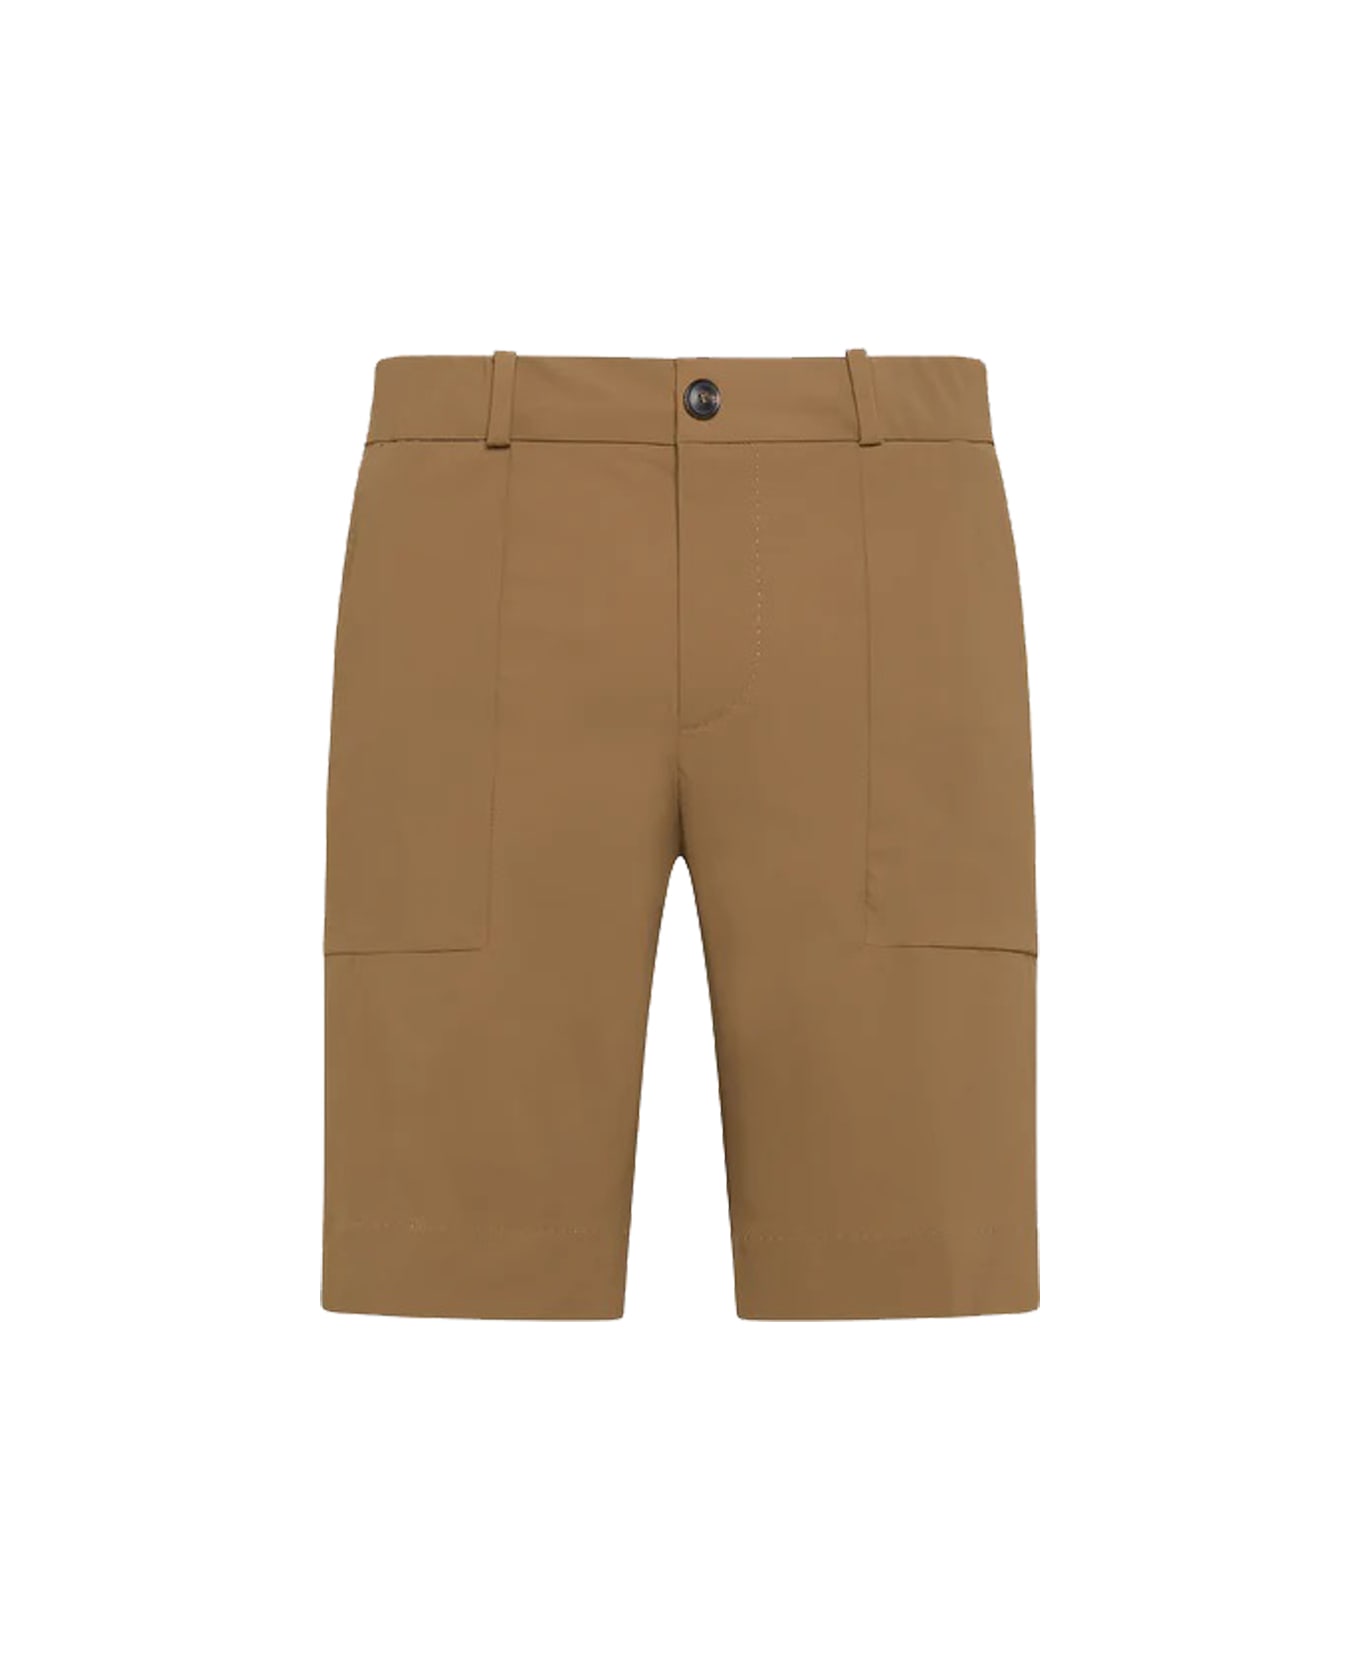 RRD - Roberto Ricci Design Shorts - Brown